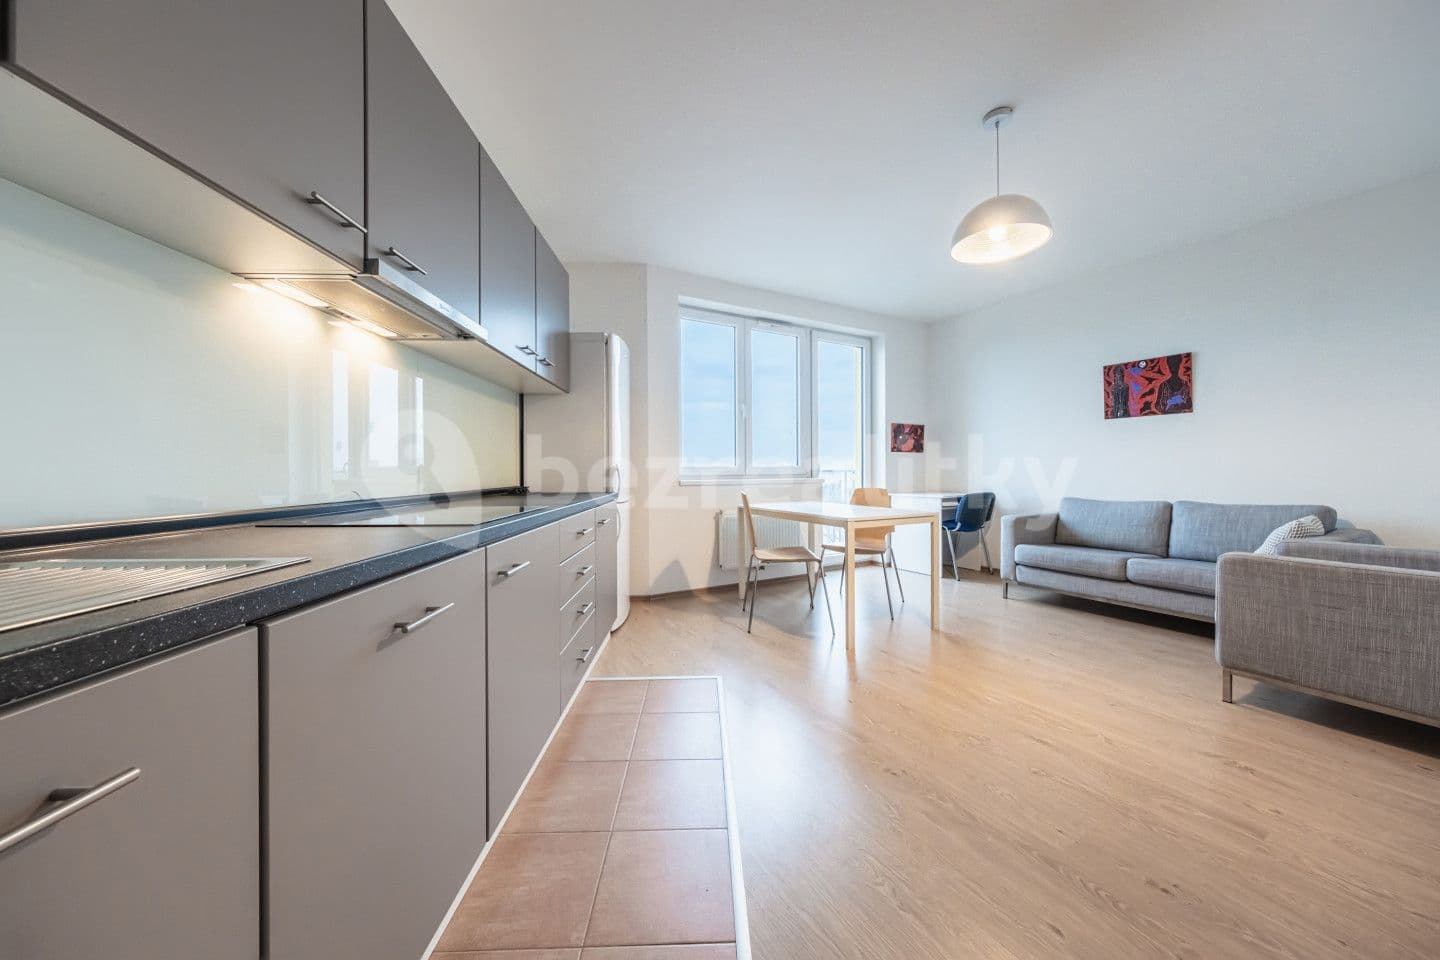 2 bedroom with open-plan kitchen flat for sale, 78 m², Březenská, Prague, Prague